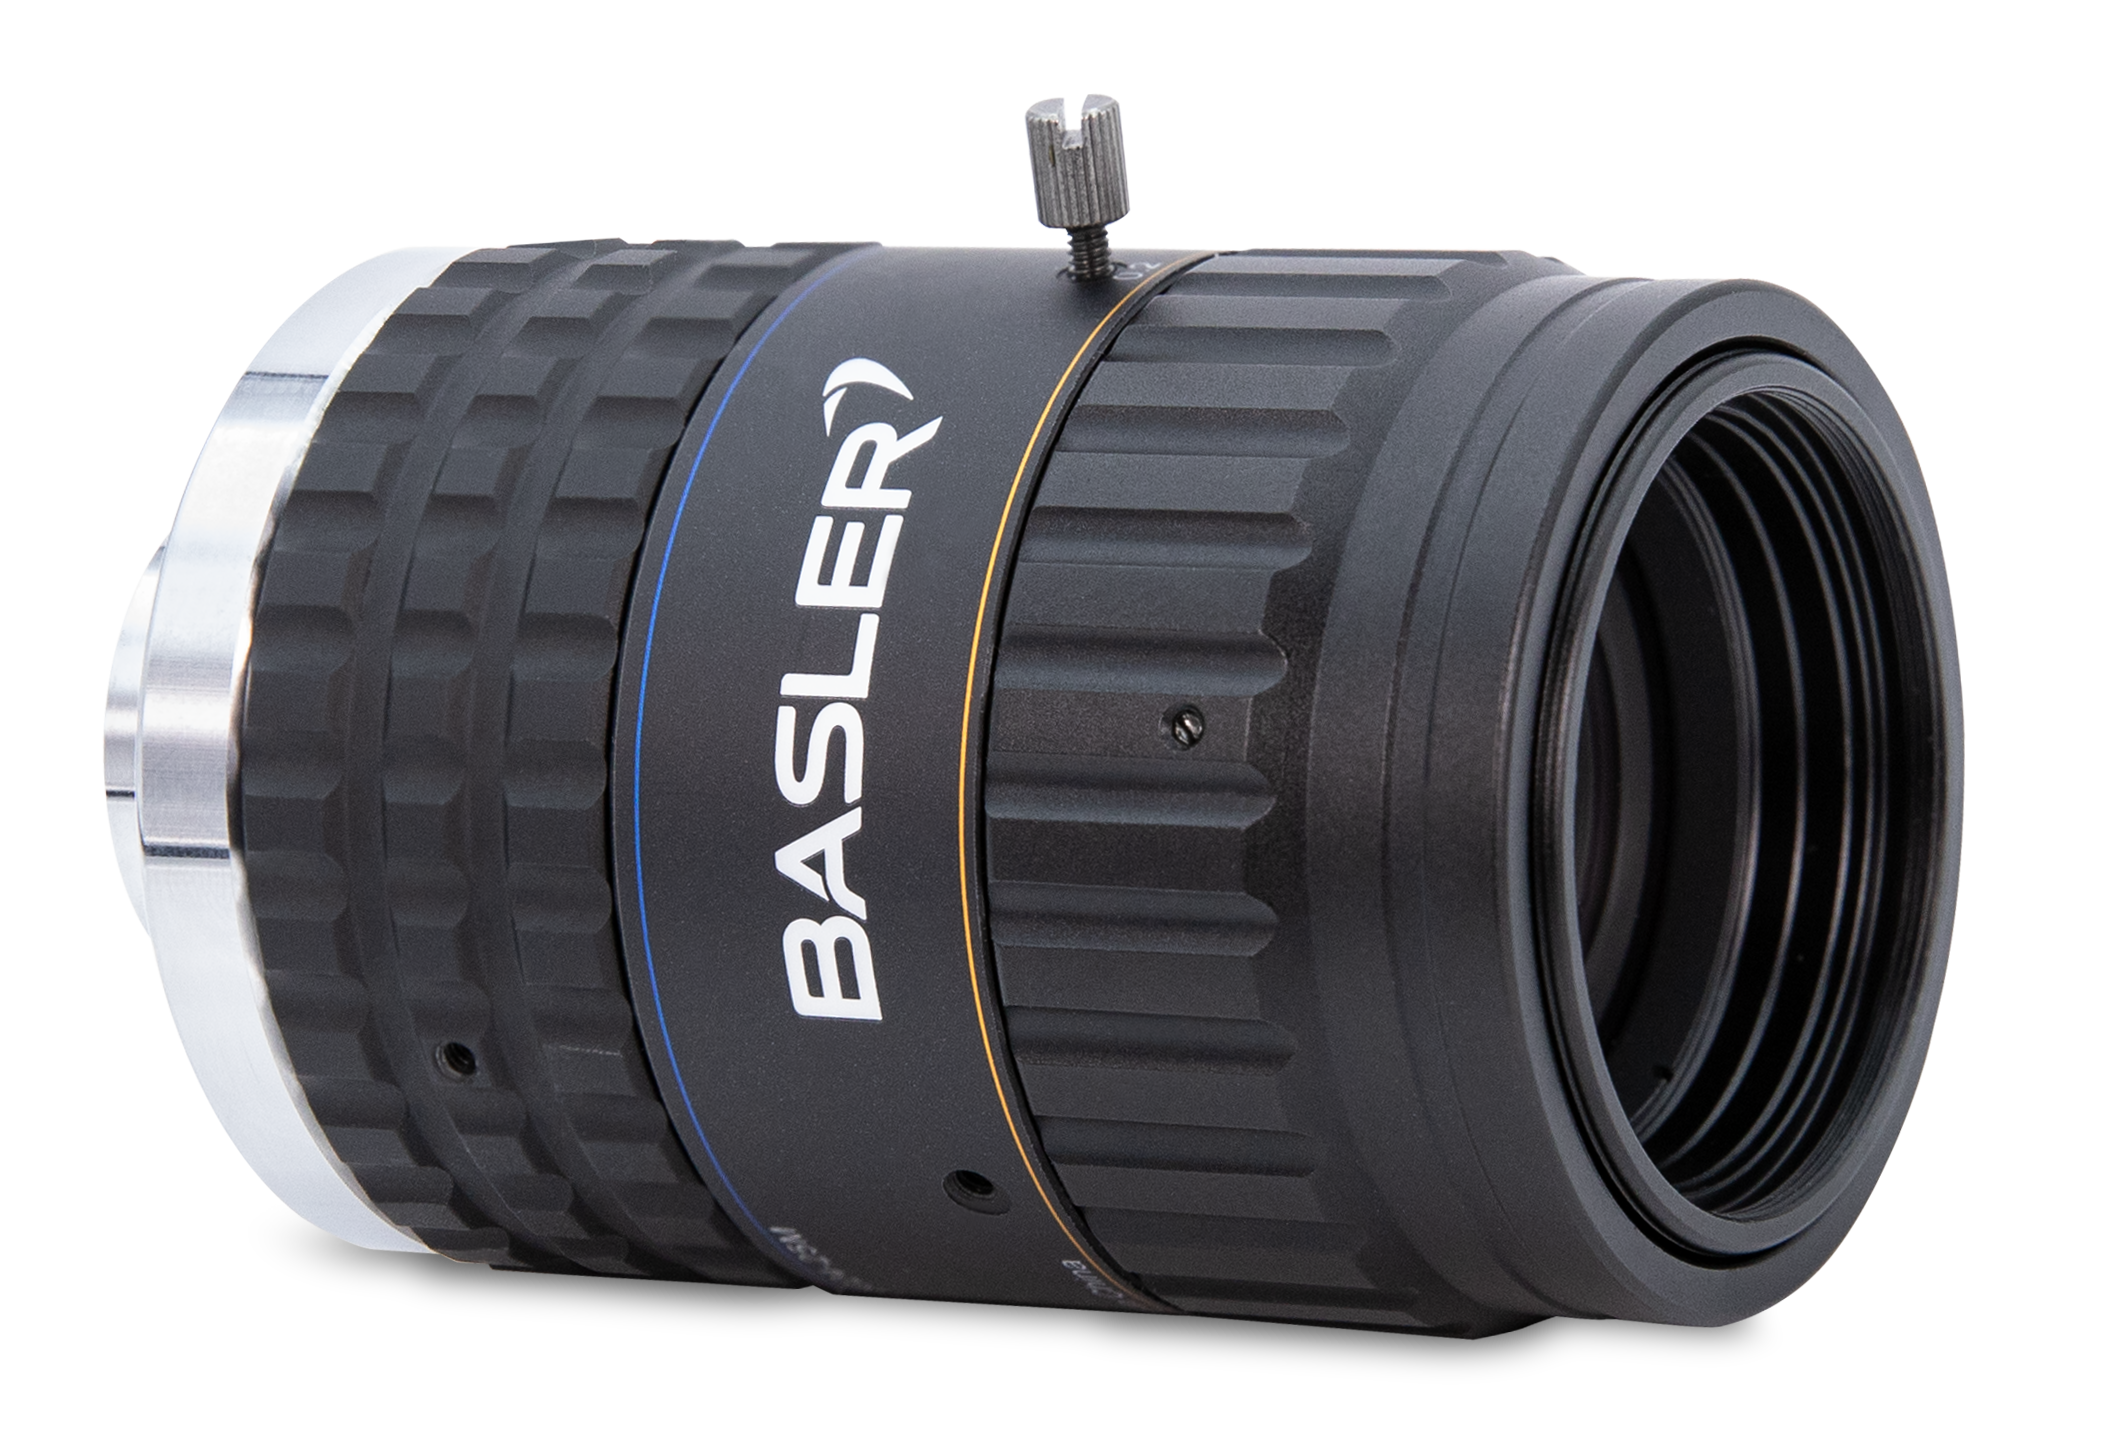 Basler 镜头 C12-5024-25M-P F2.4 f16.0 mm